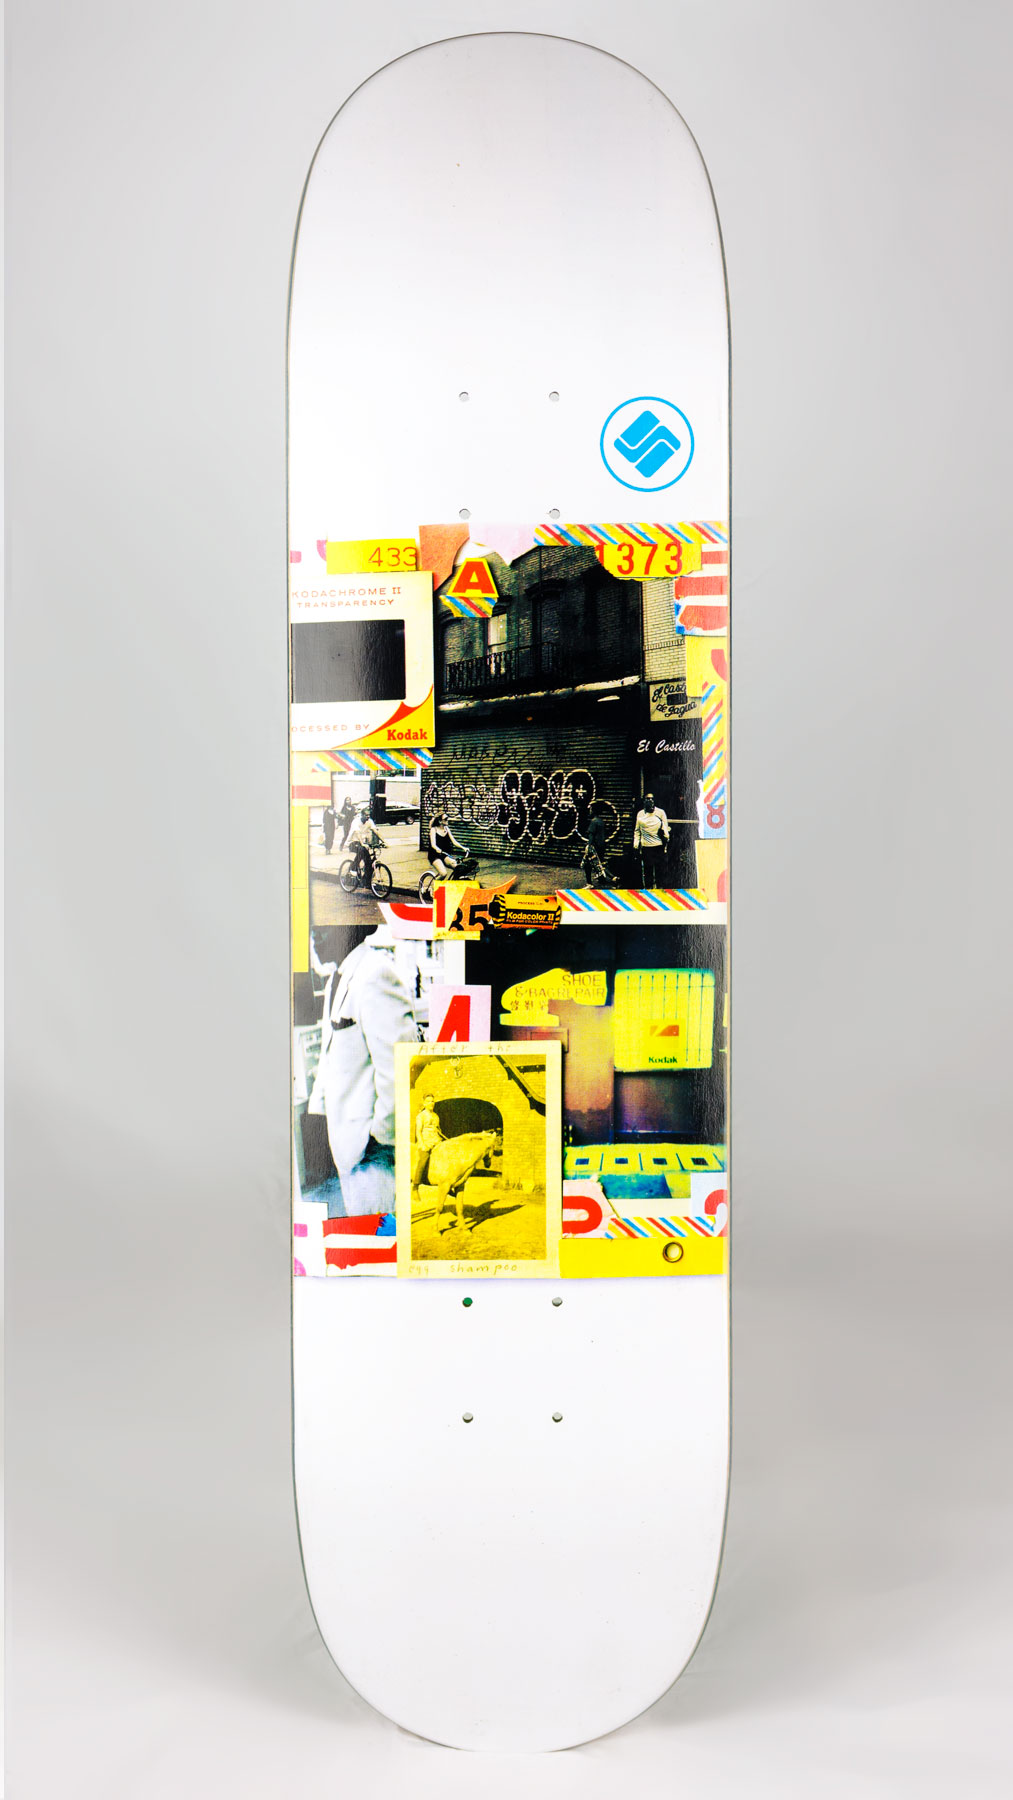 skateboard art shawn whisenant memories sf zine maker artist collage skateboard graphic